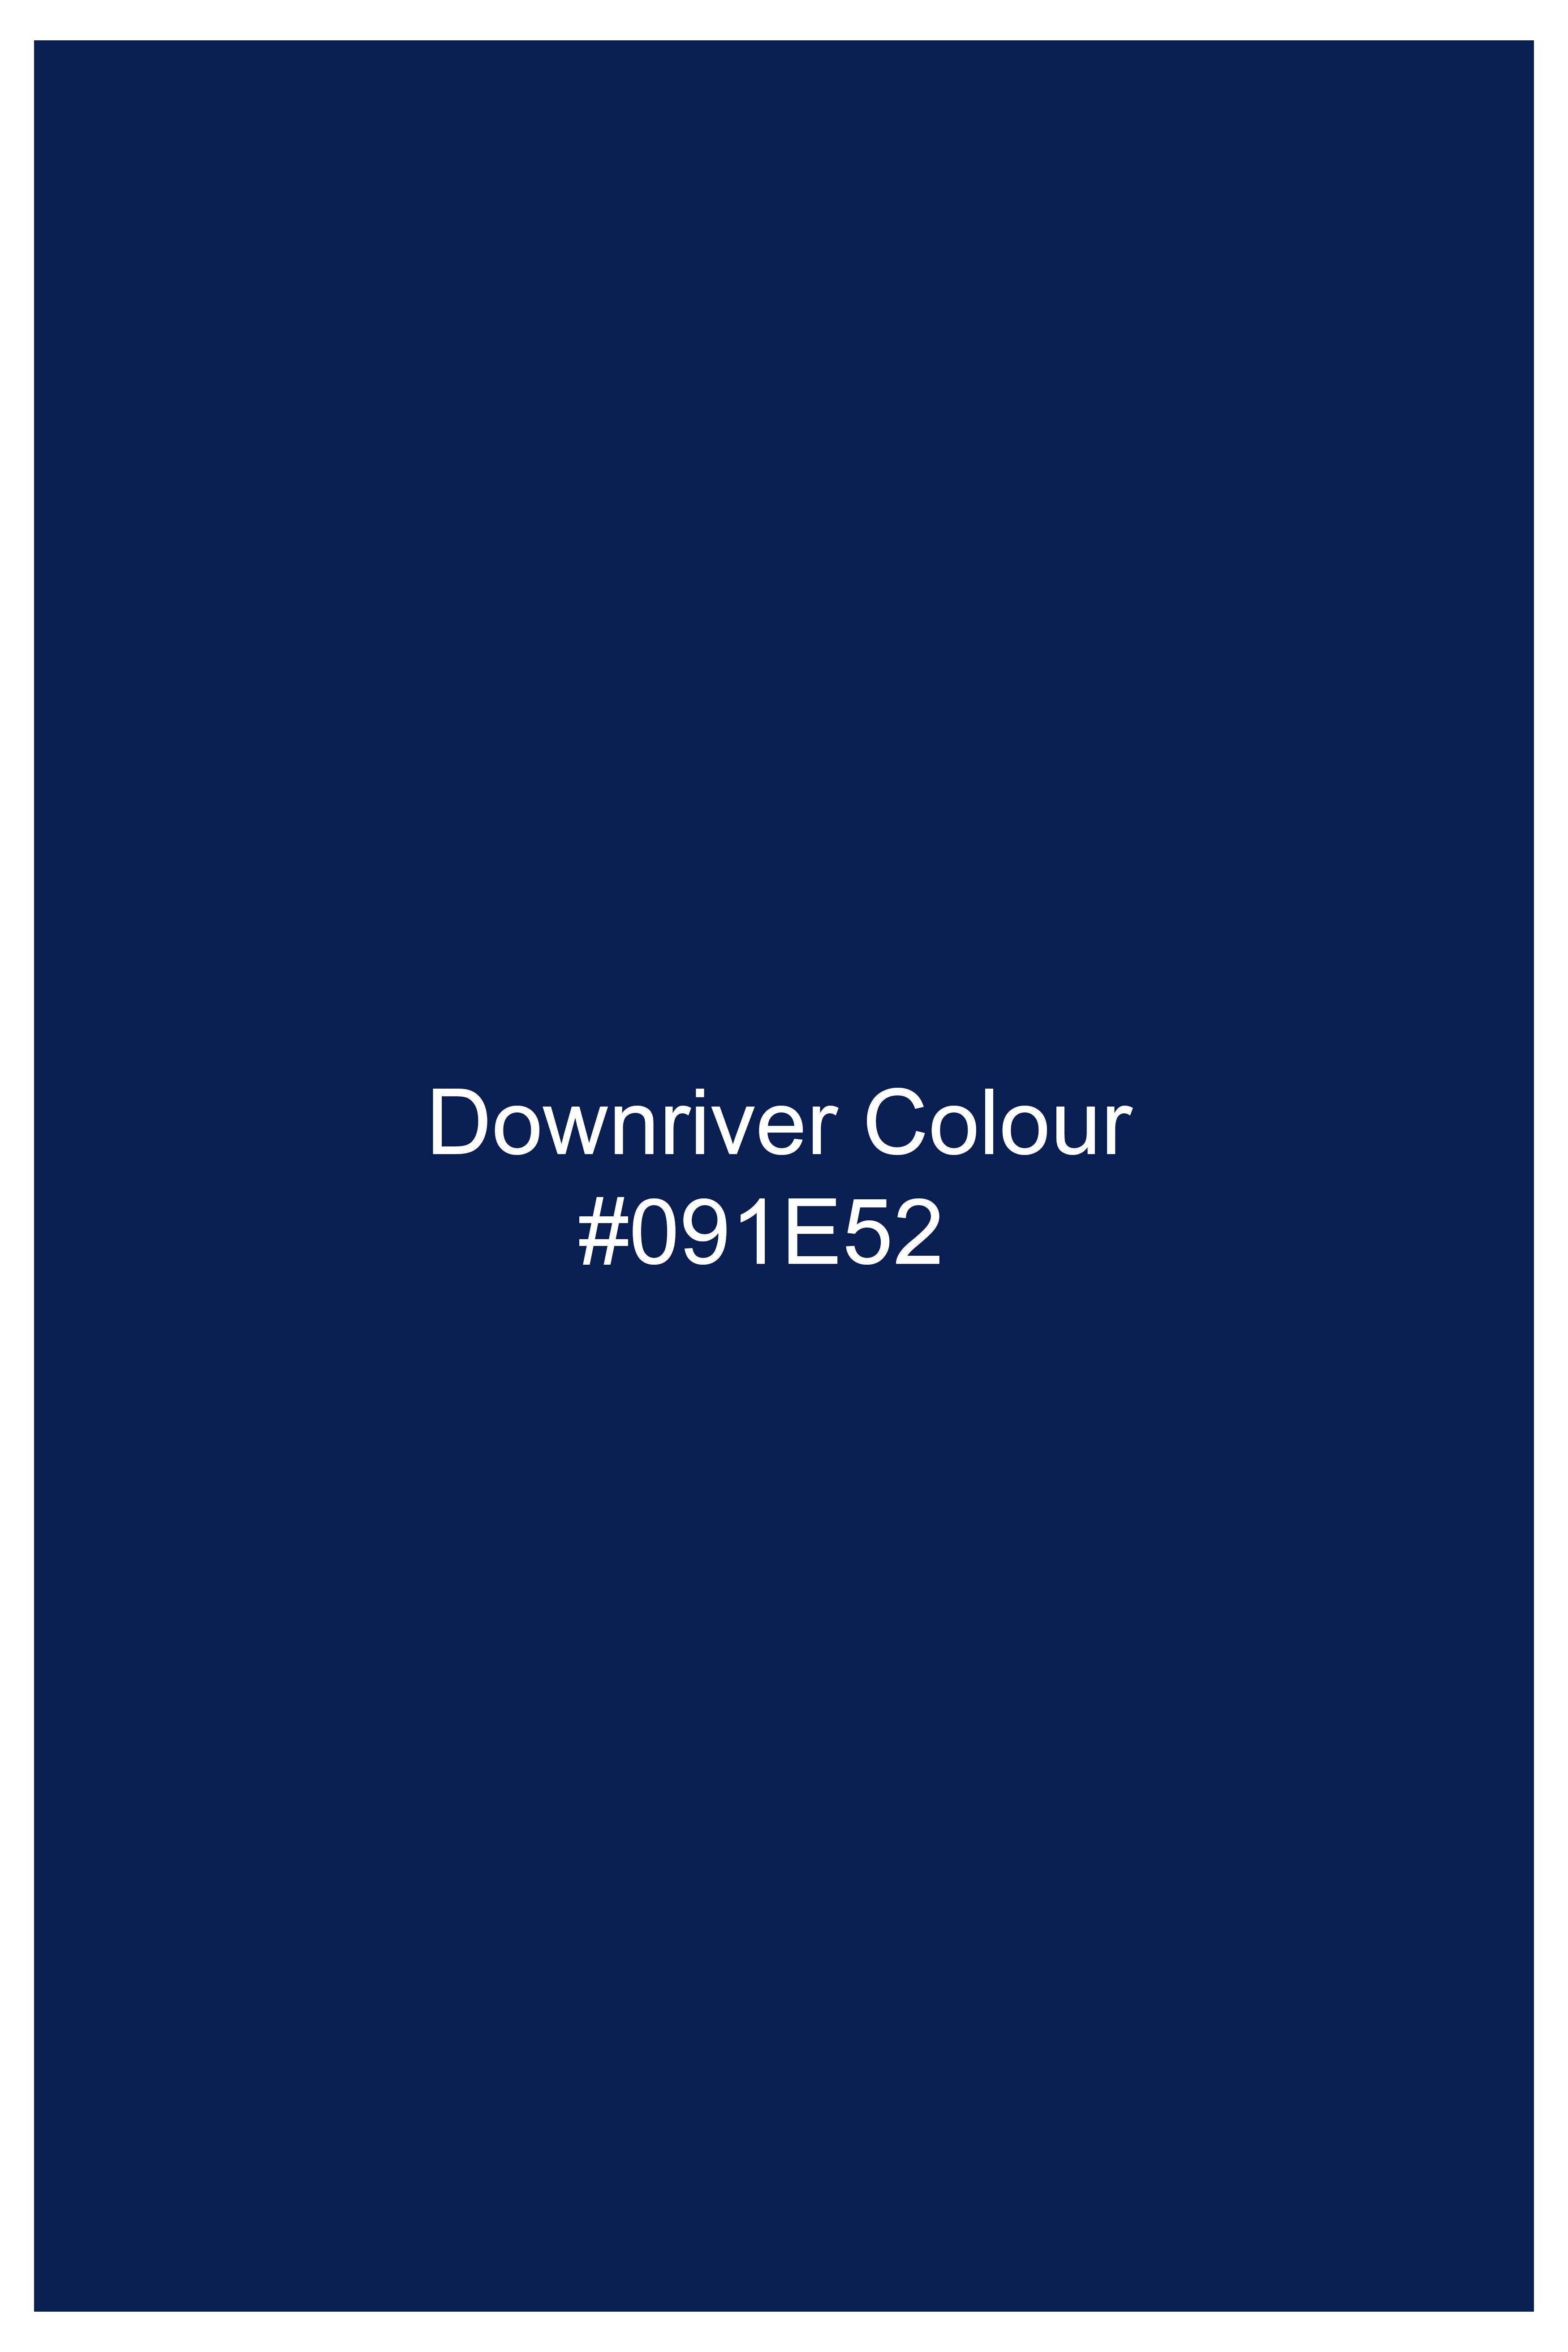 Downriver Blue Wool Rich Single Breasted Blazer BL3056-SB-36, BL3056-SB-38, BL3056-SB-40, BL3056-SB-42, BL3056-SB-44, BL3056-SB-46, BL3056-SB-48, BL3056-SB-50, BL3056-SB-52, BL3056-SB-54, BL3056-SB-56, BL3056-SB-58, BL3056-SB-60